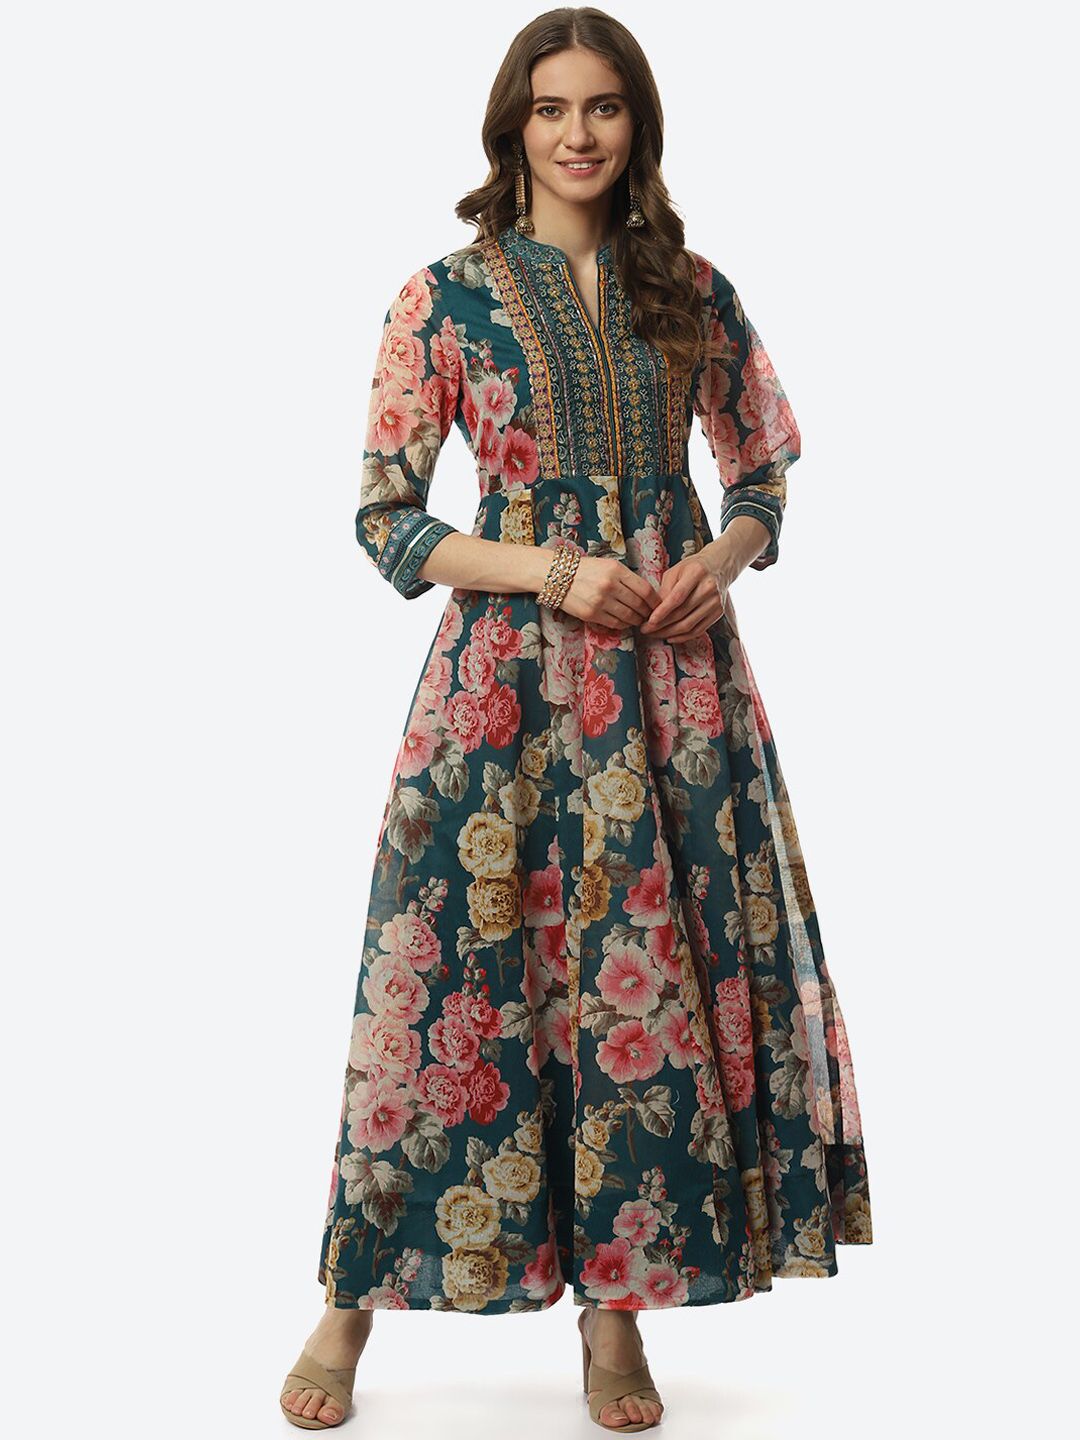 Biba Women Teal & Pink Floral Printed Maxi Dress Price in India